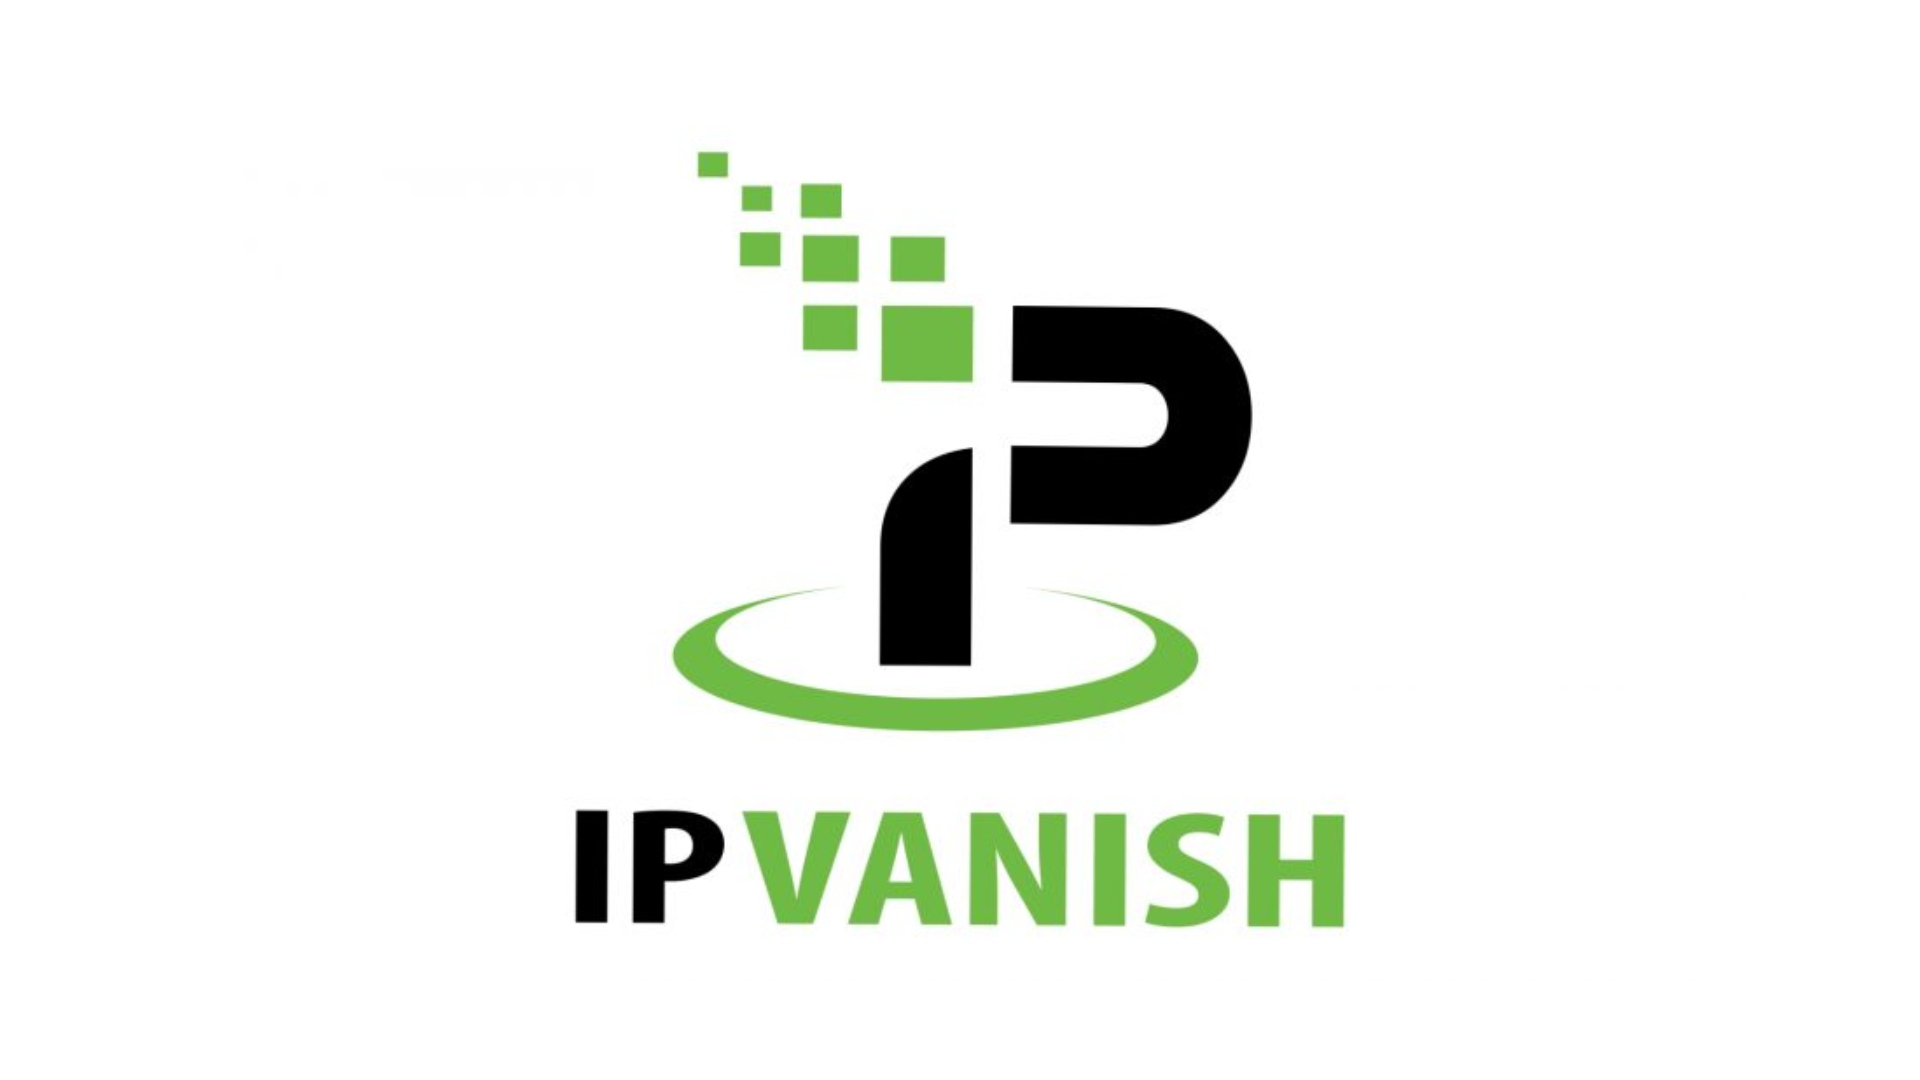 VPN deals: IPVanish. Image shows the company logo.